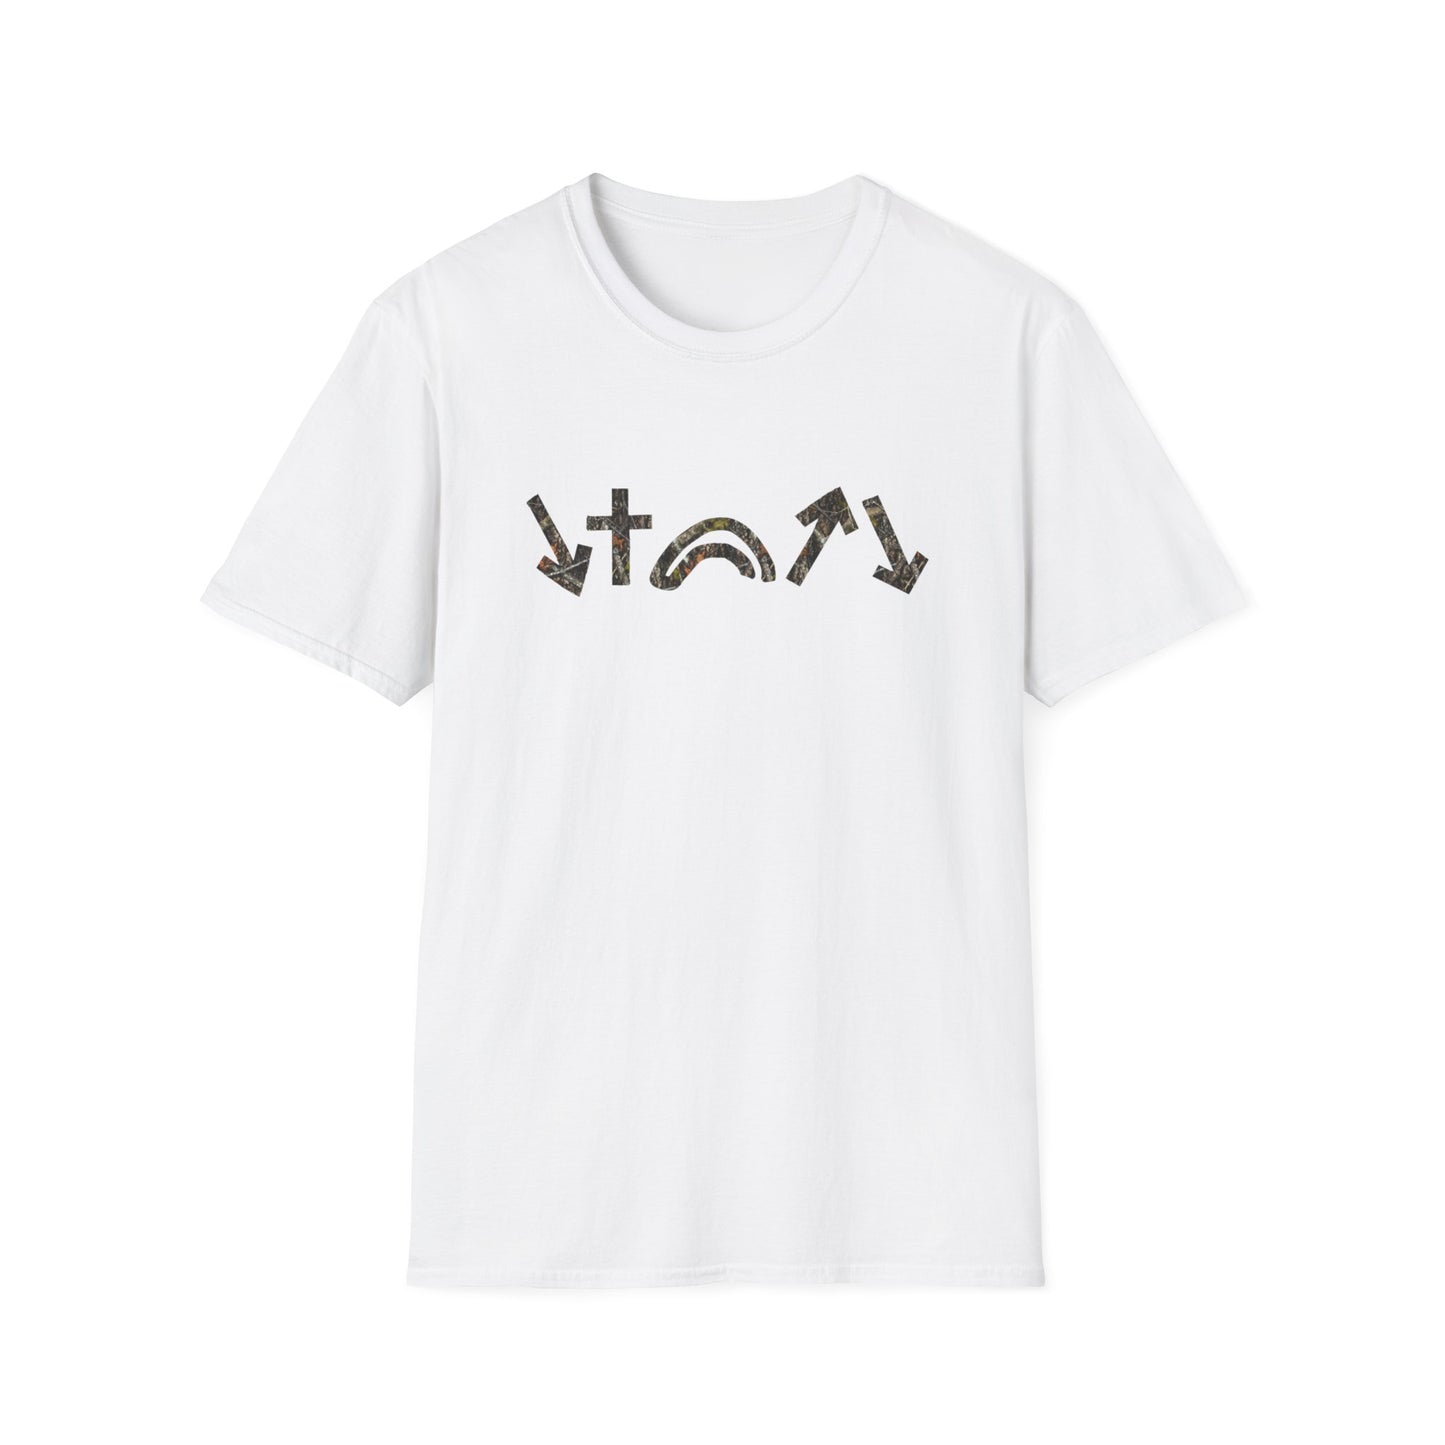 5 Gospel Symbols Shirt - Tree Camo Edition